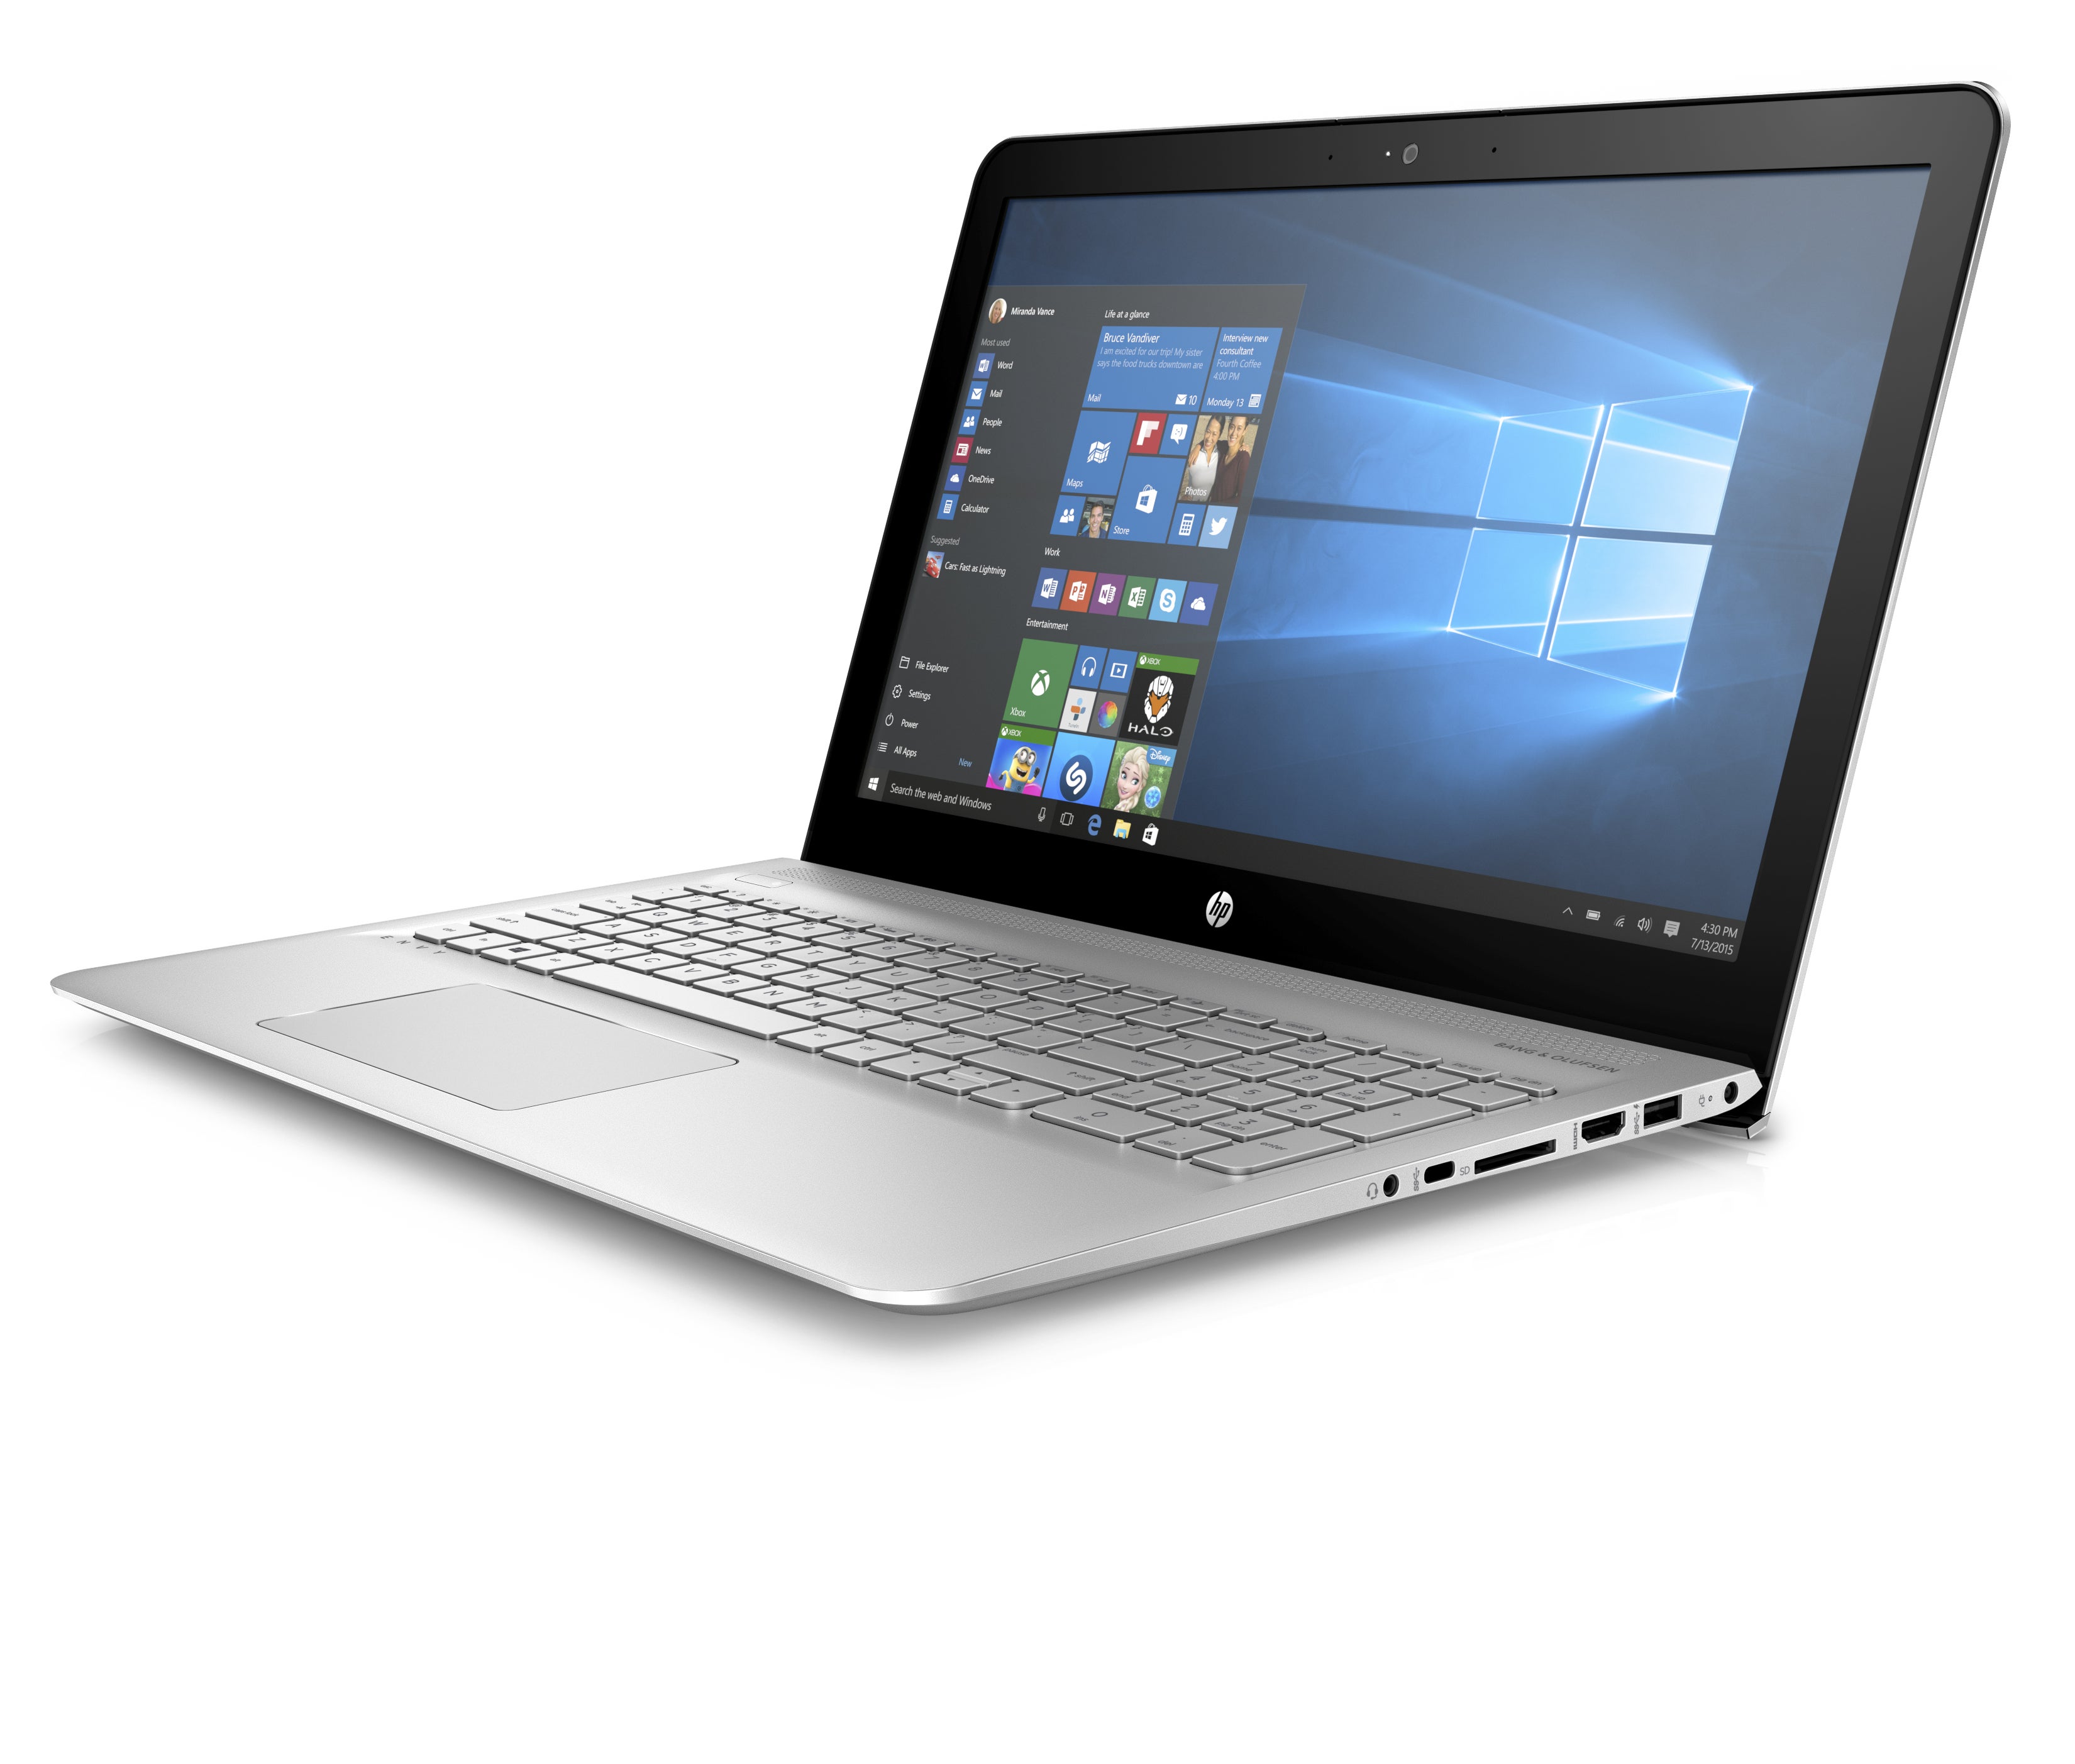 610161 001 main board for HP G62 Laptop Motherboard AMD